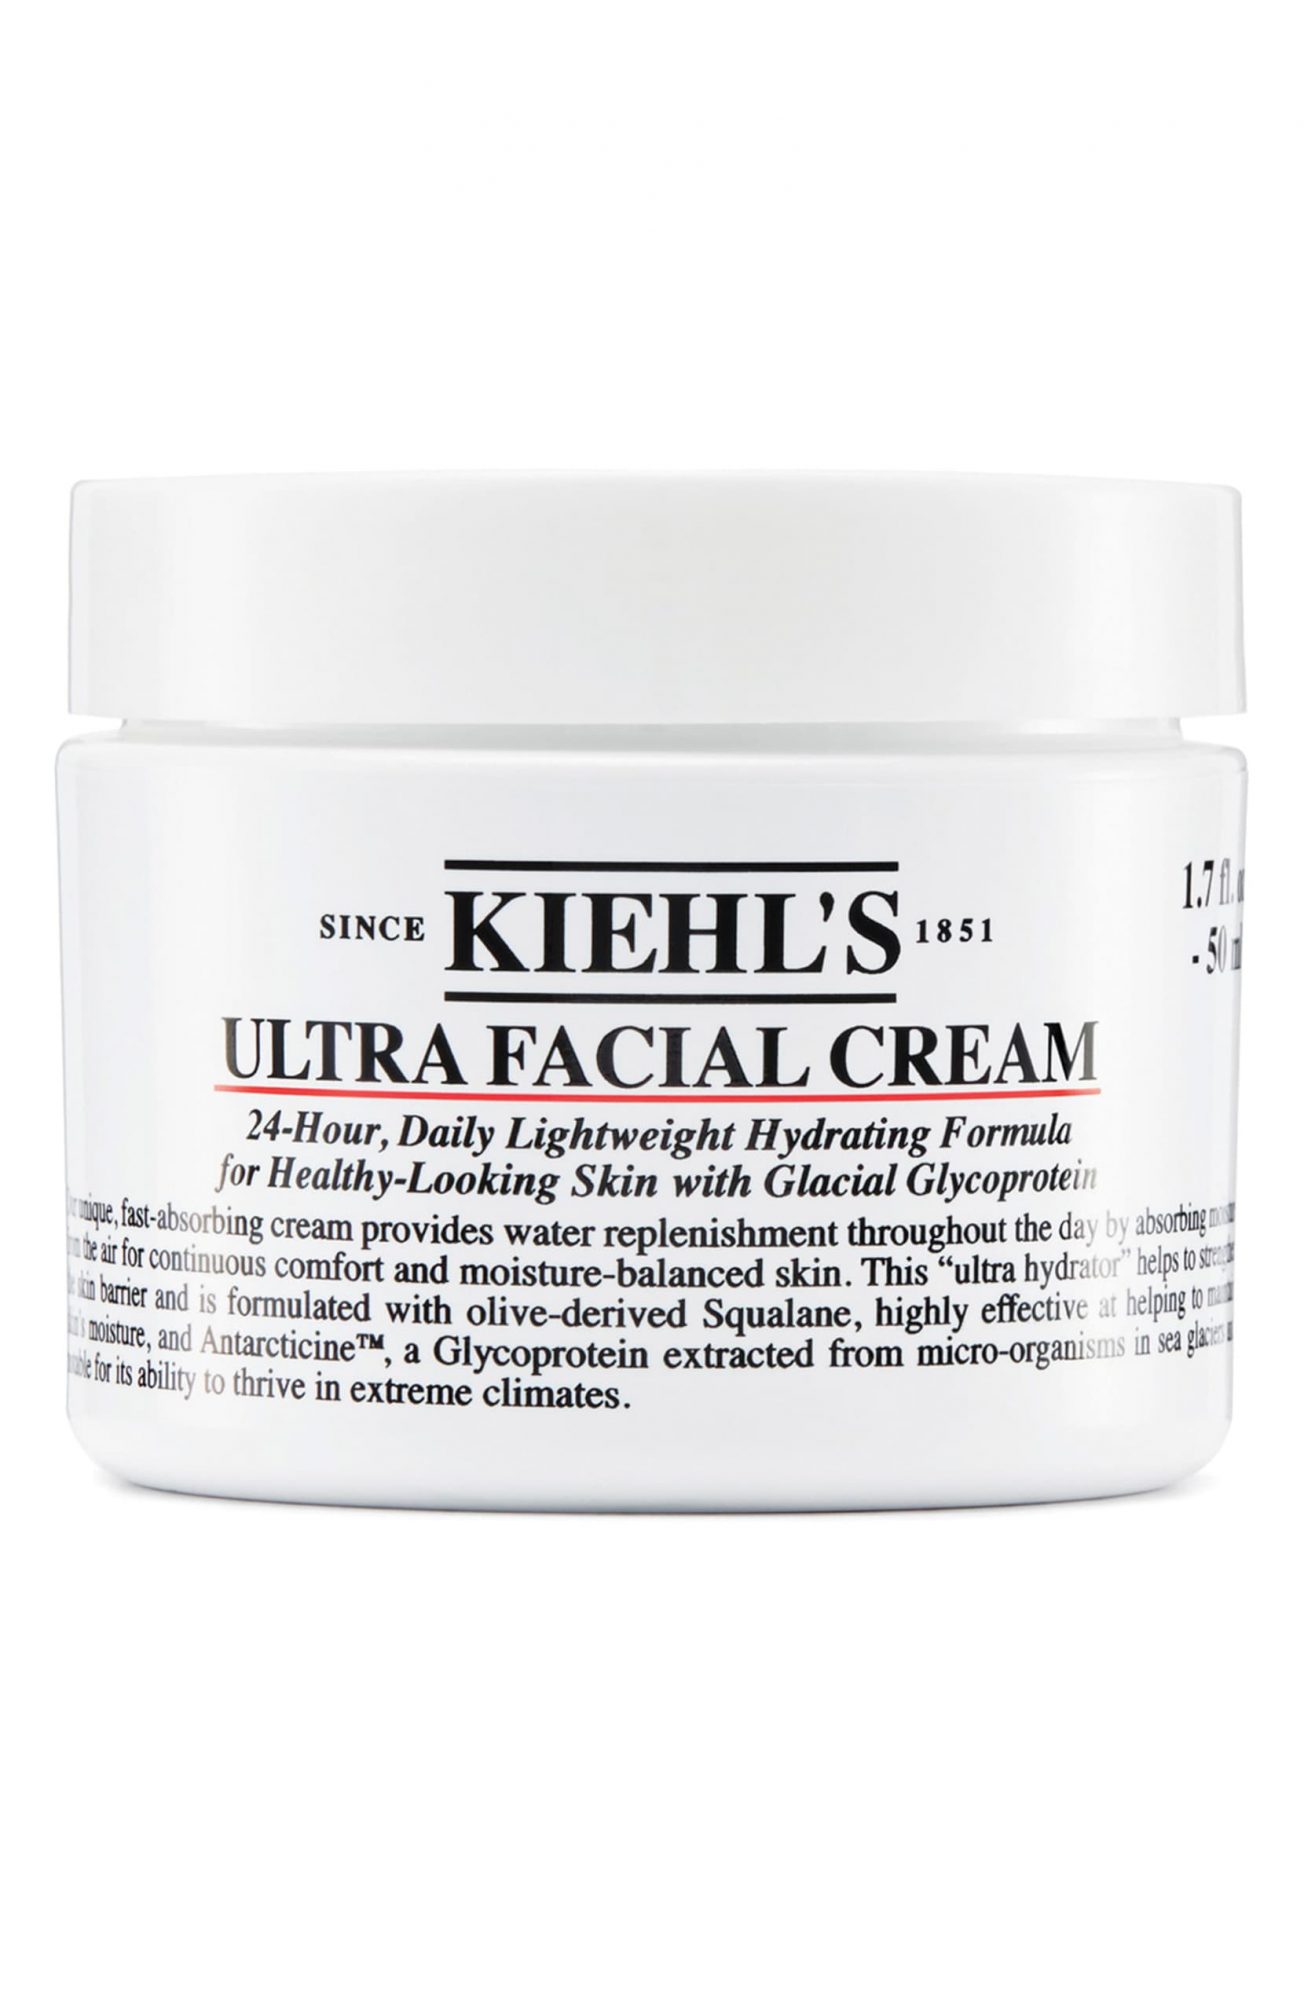 Kiehls ultra face cream moisturizer